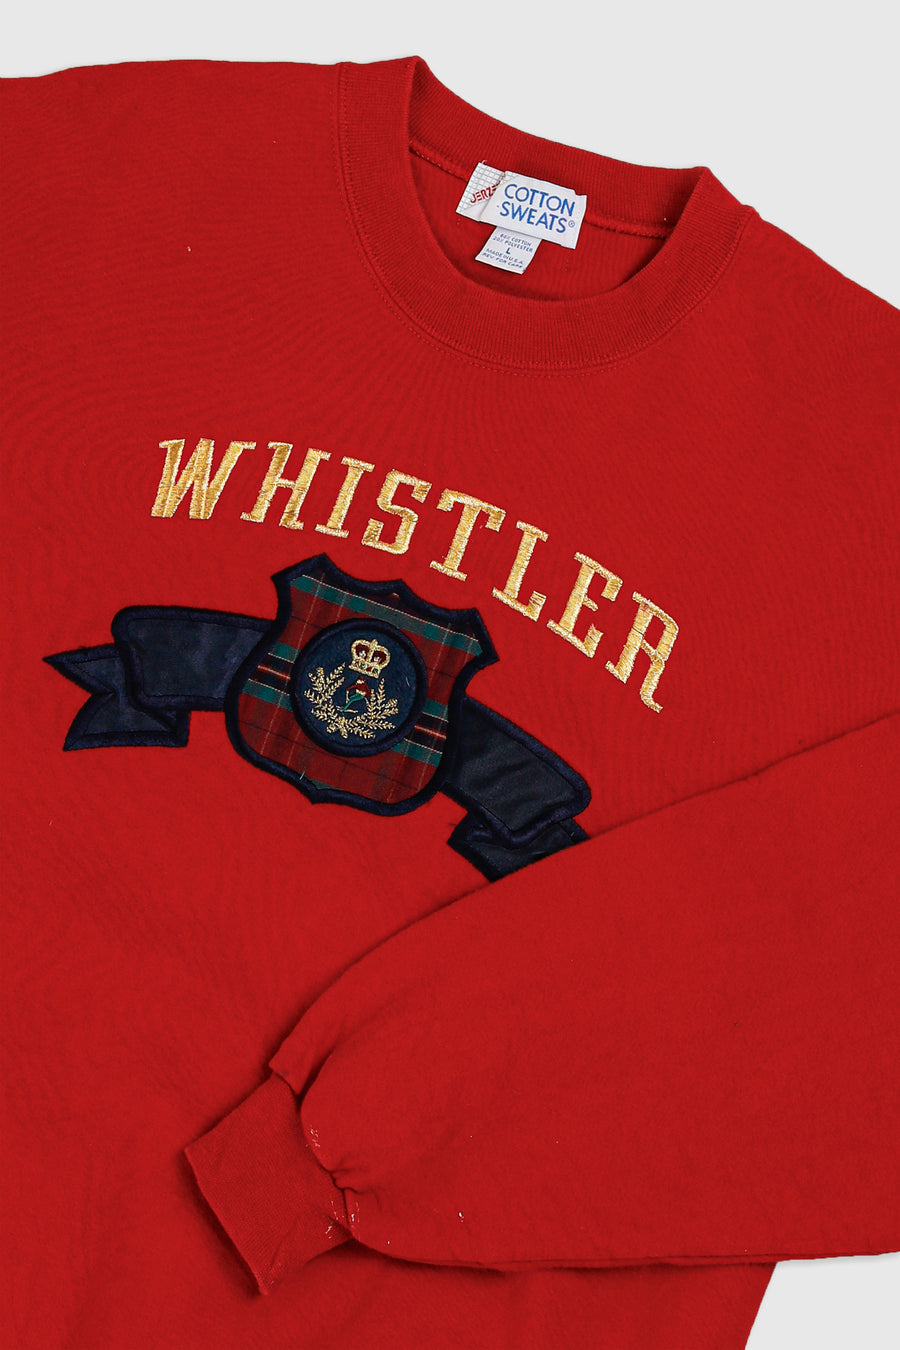 Vintage Whistler Sweatshirt - L